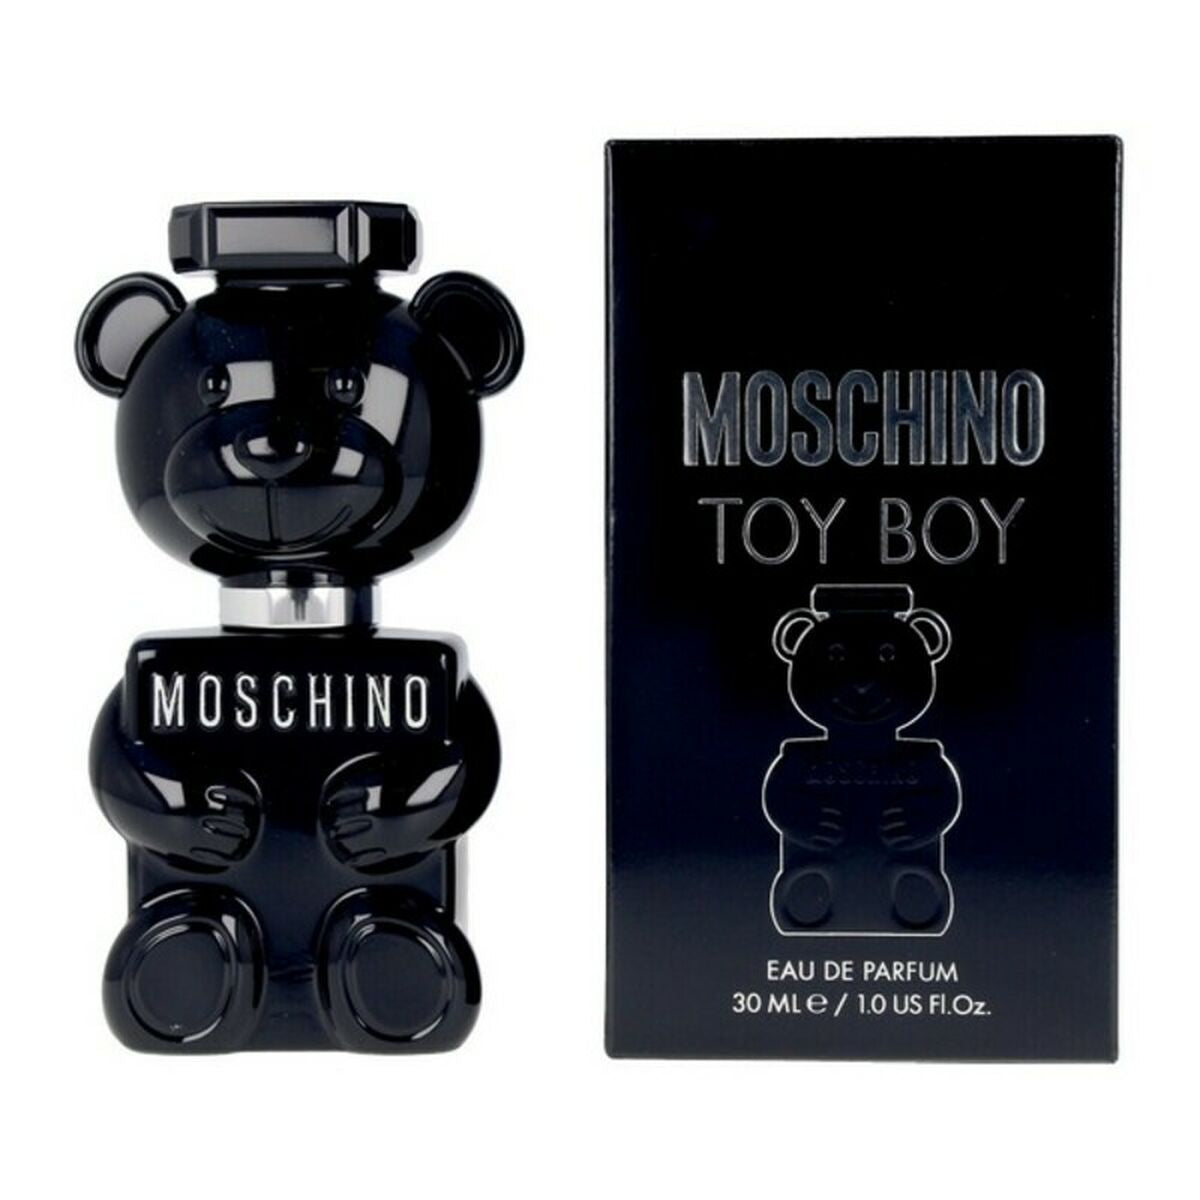 Kaufe Toy Boy Moschino BF-8011003845118_Vendor EDP 30 ml EDP 30 ml - Herren bei AWK Flagship um € 49.00